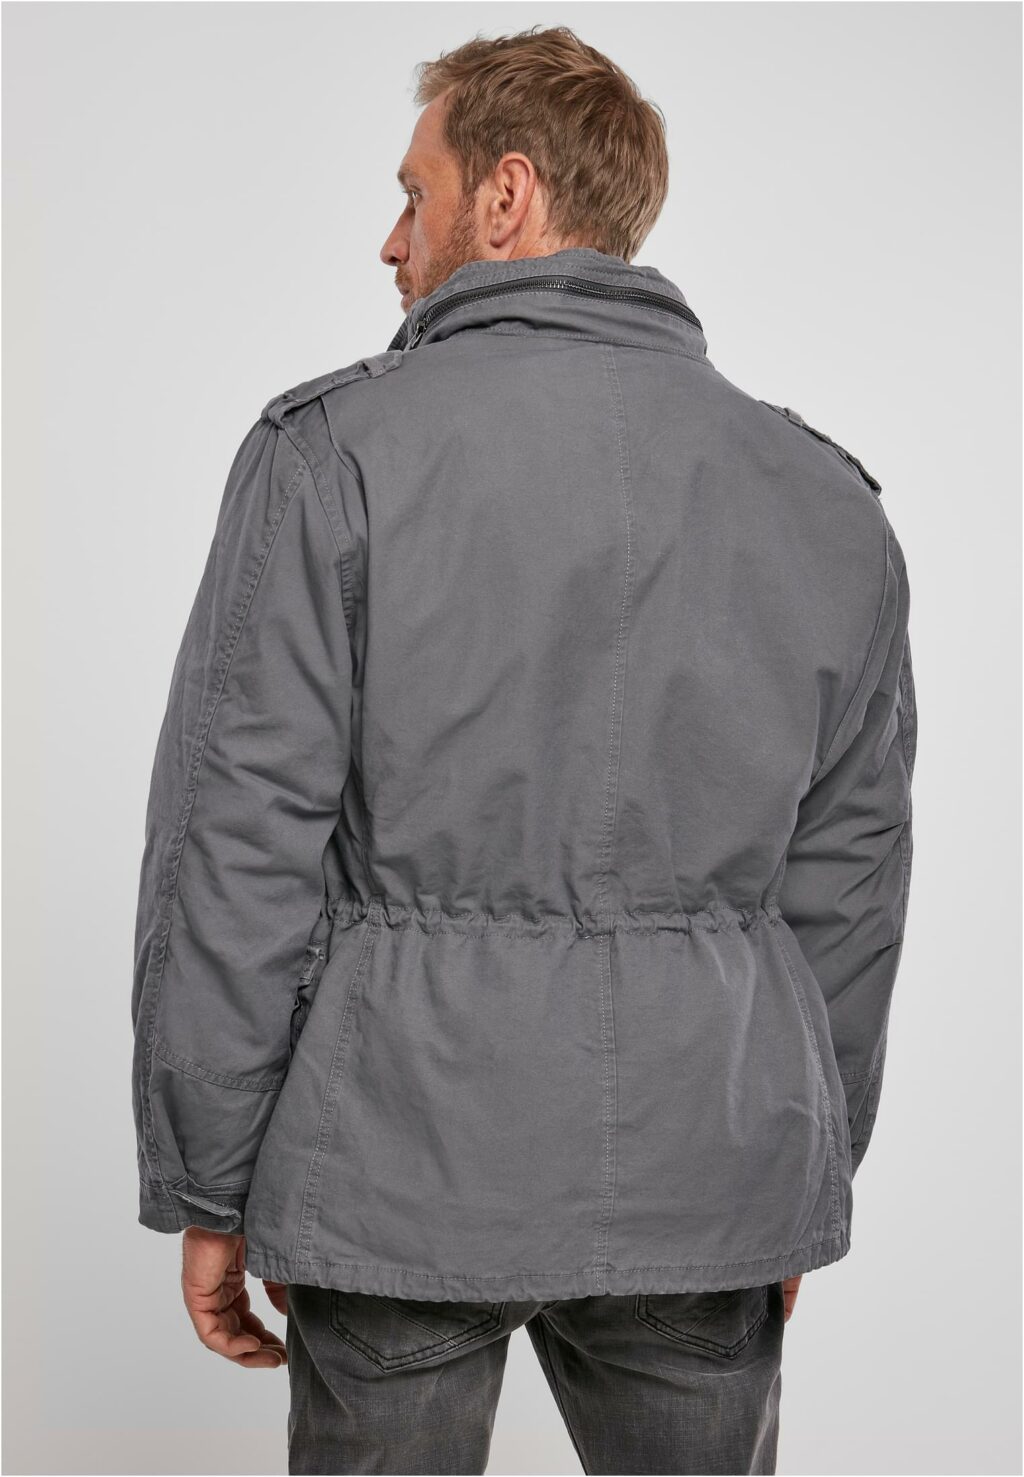 Brandit M-65 Giant Jacket charcoal grey BD3101